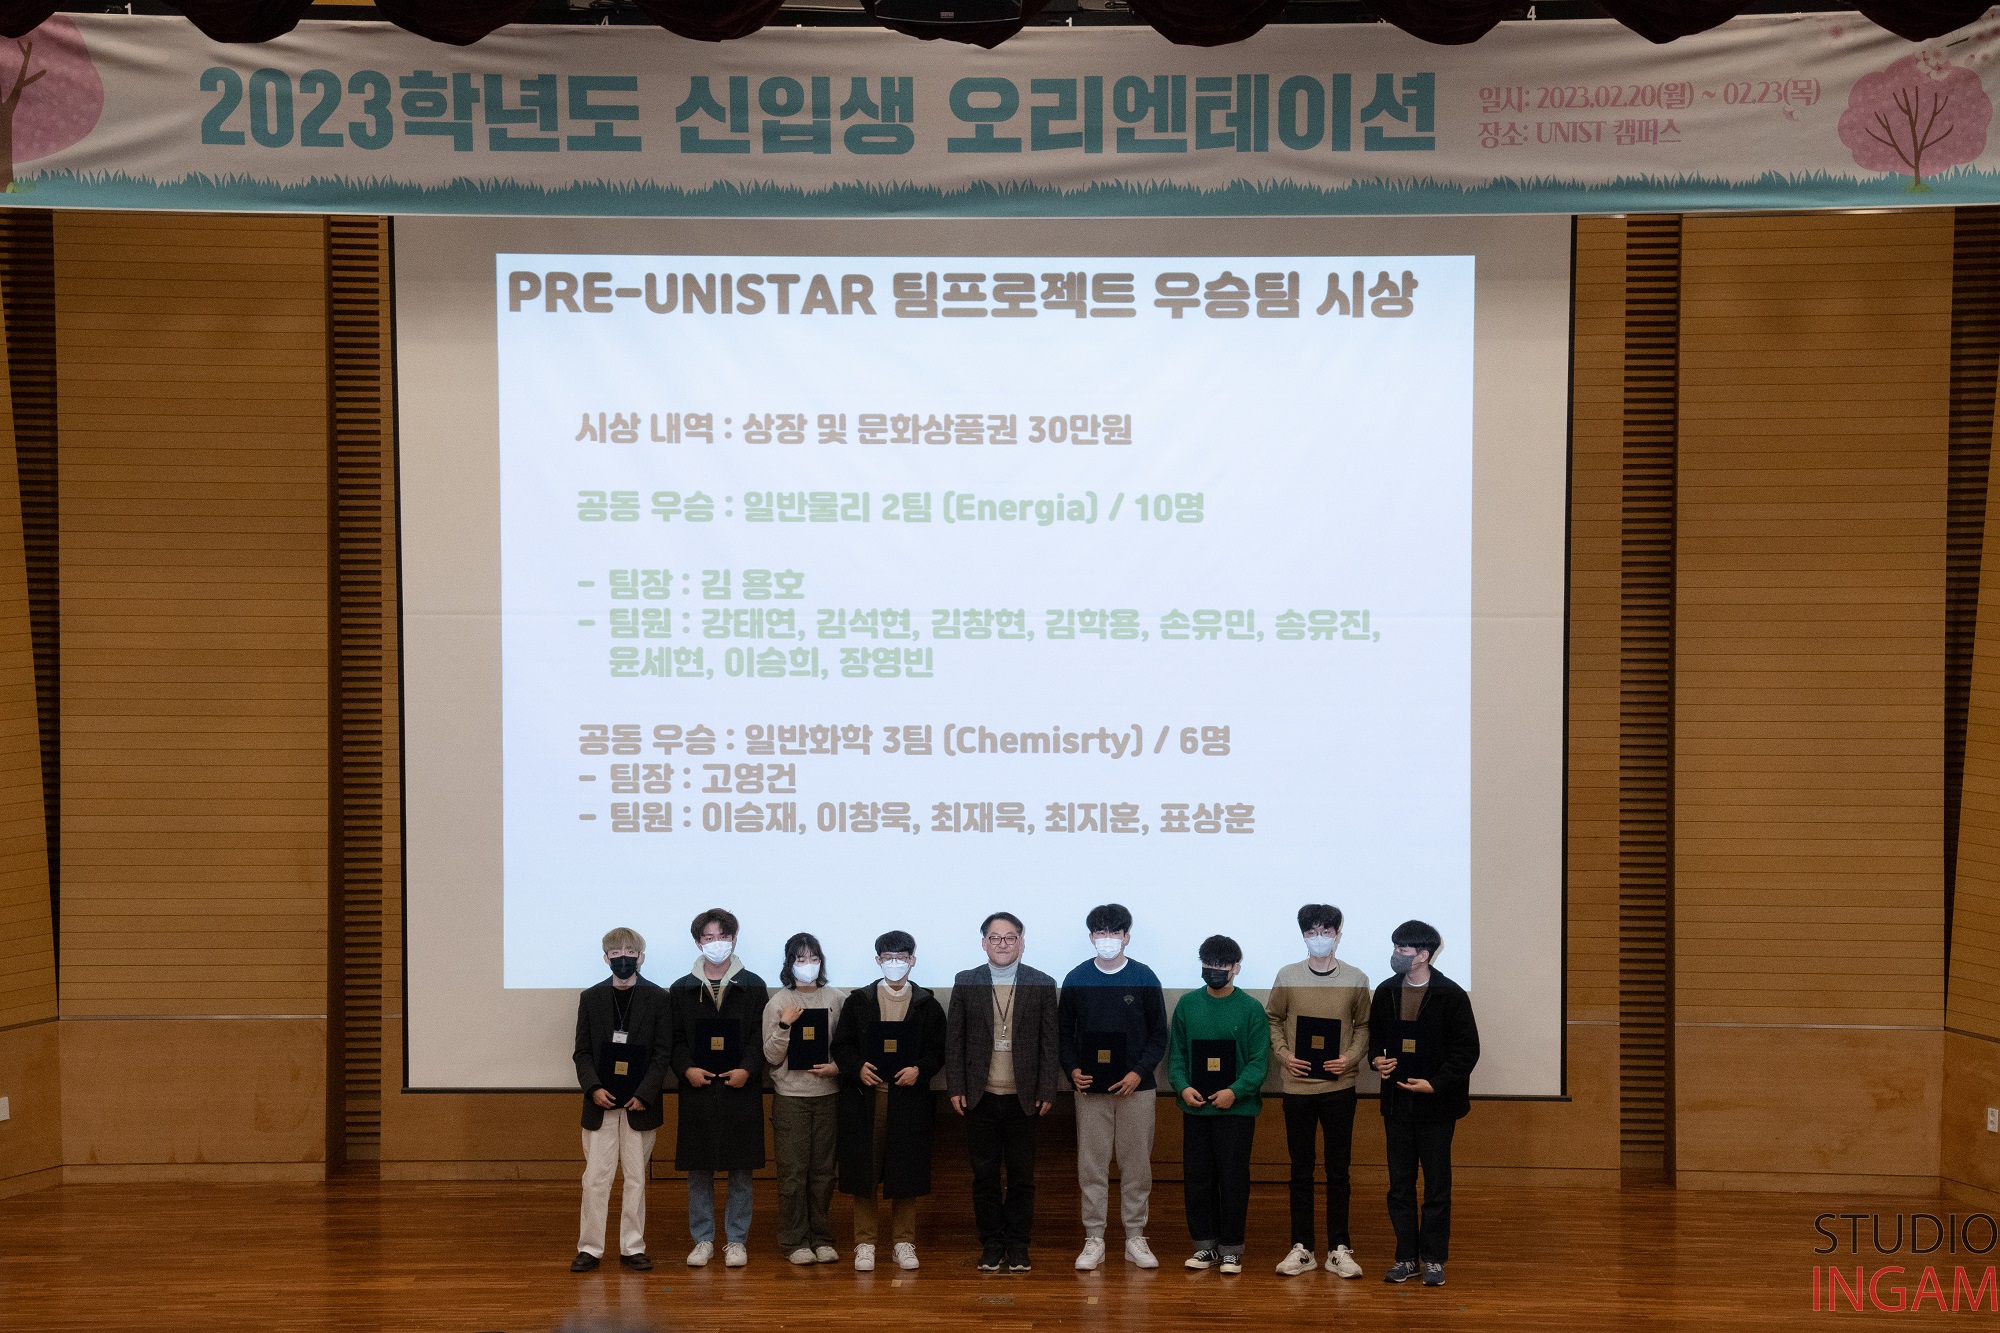 General Physics Team #2 that won the PRE-UNISTAR Team Project | Image Credit: Studio Ingam